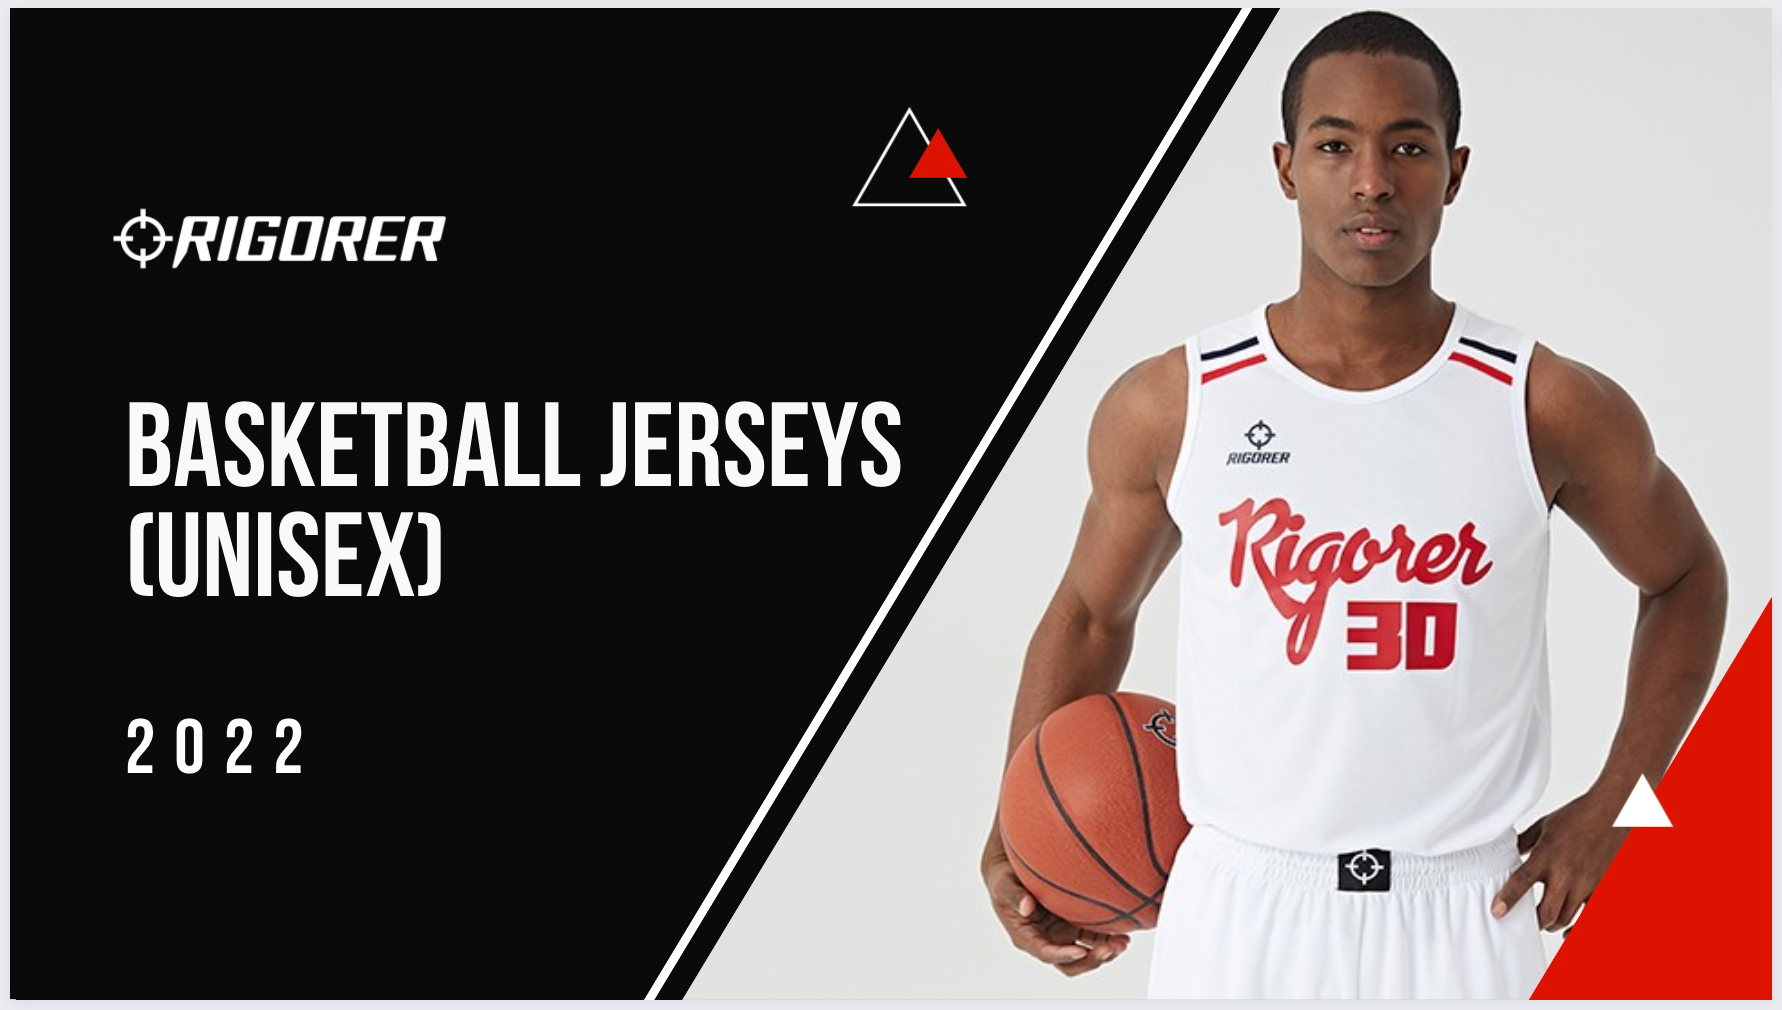 Printeesg - #1 Jersey Vendor in Singapore - Top quality Basketball jersey